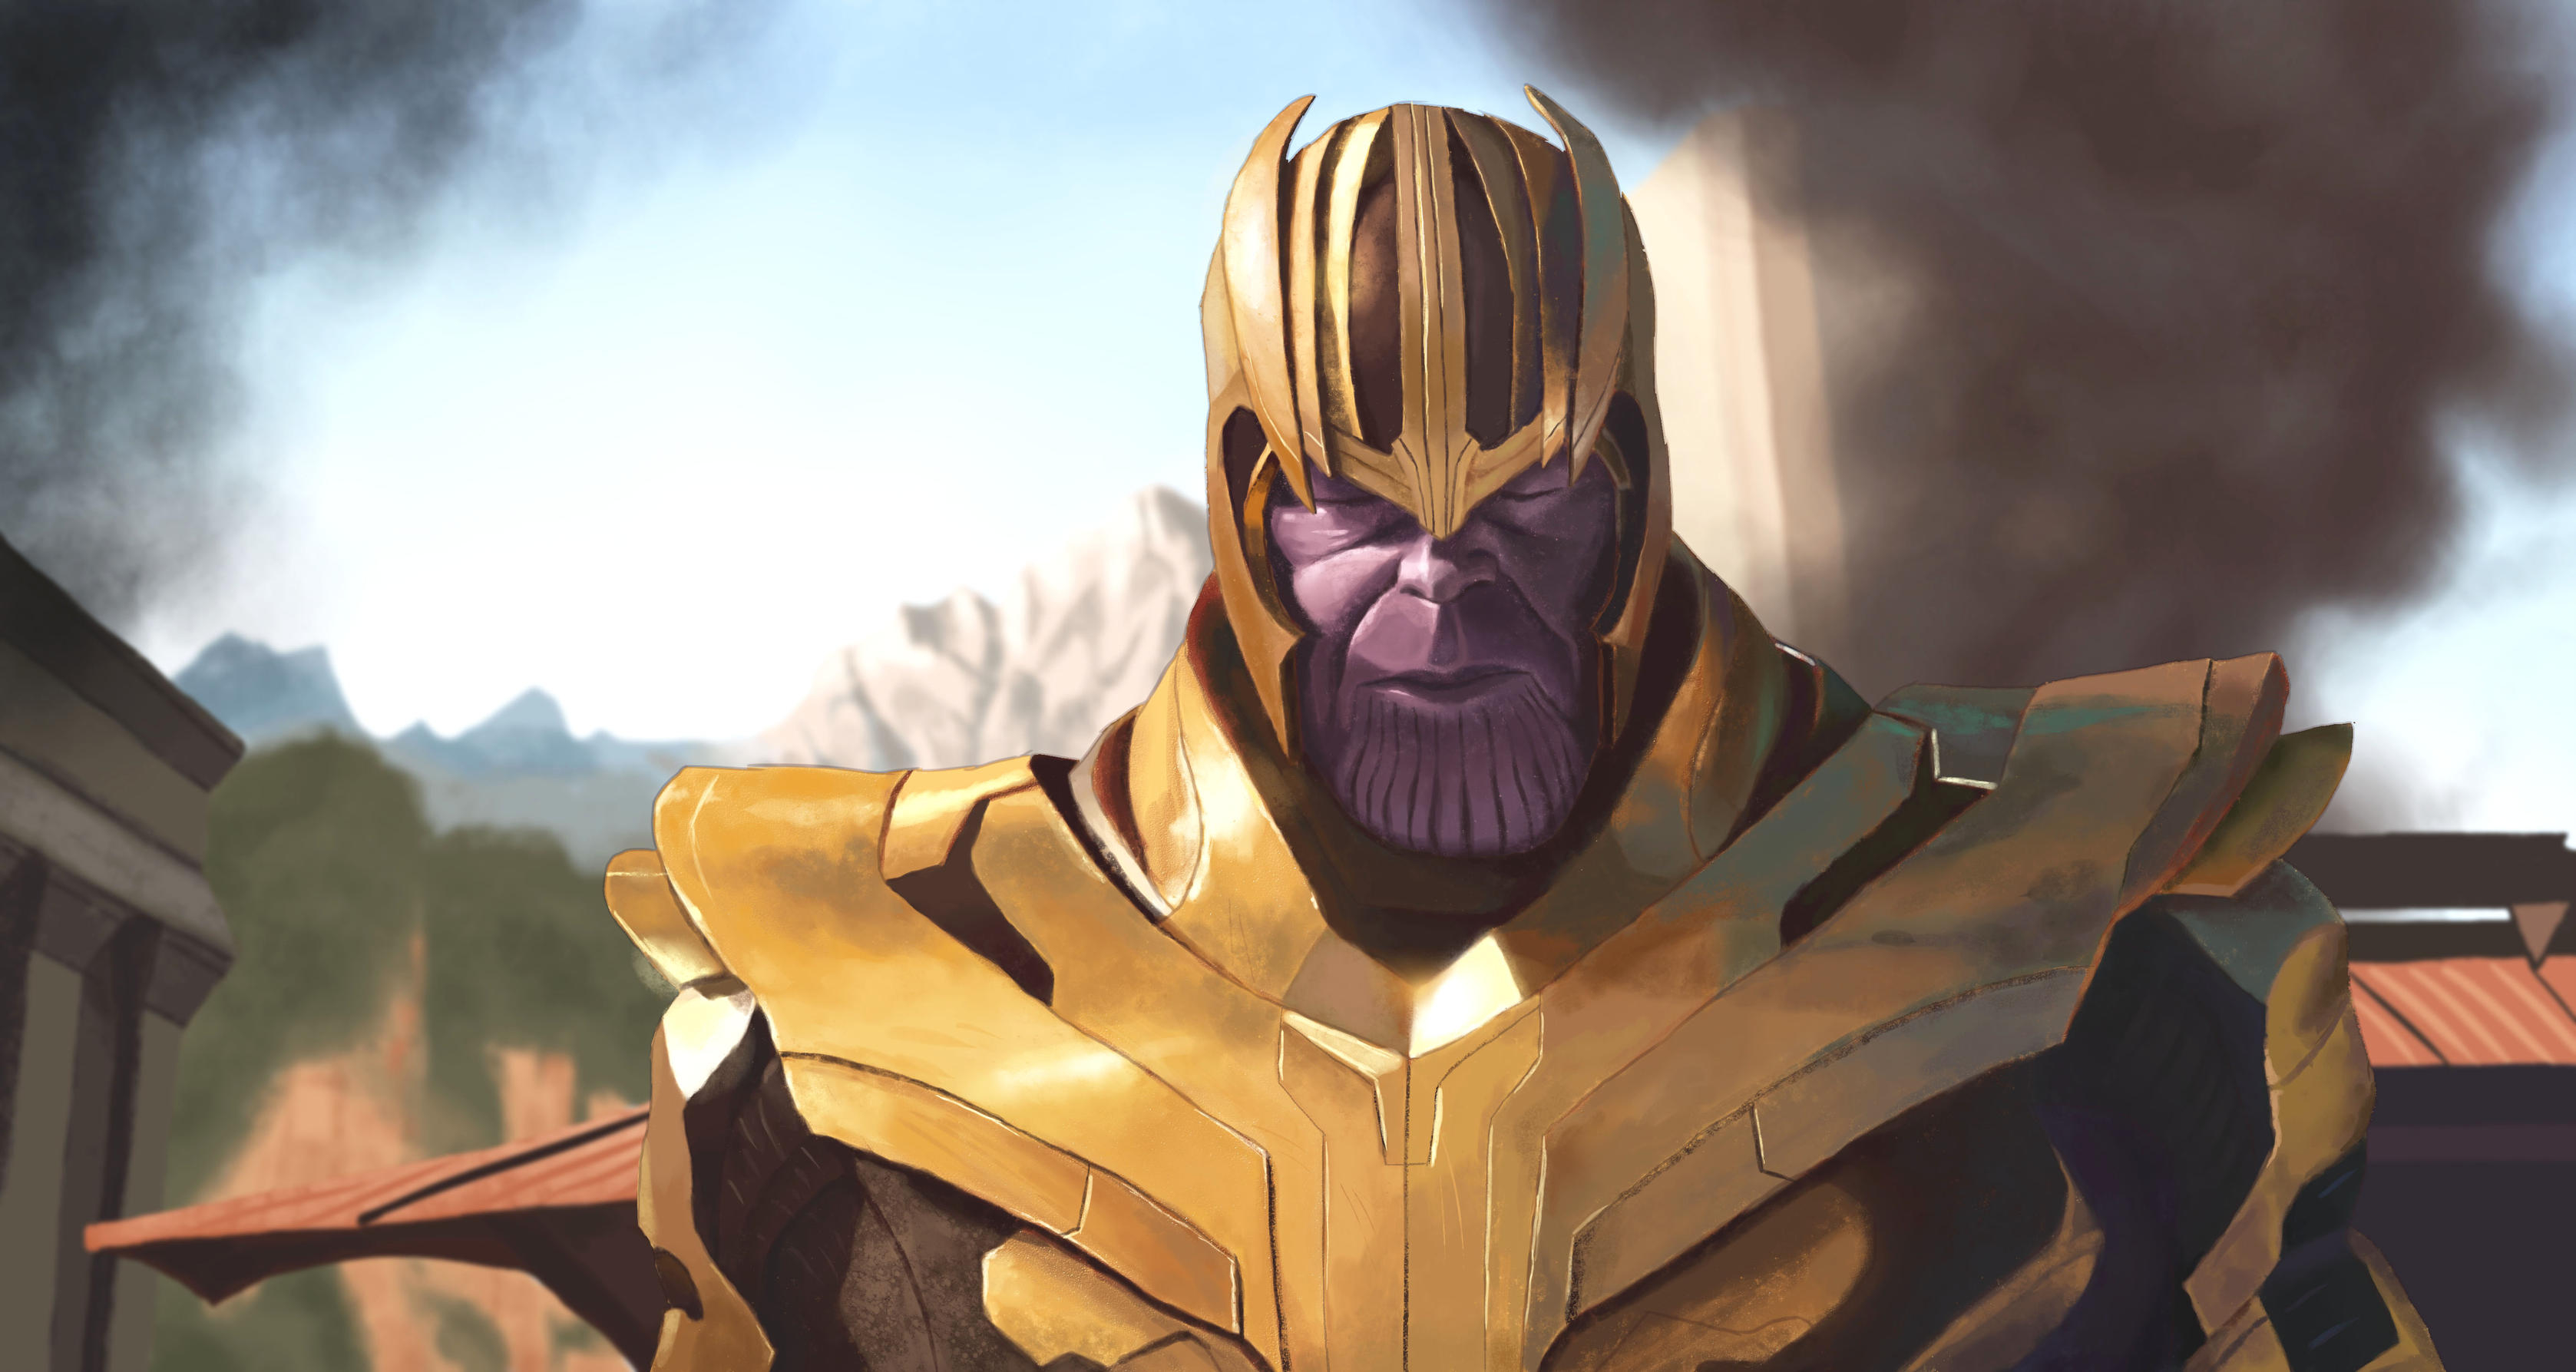  Thanos  4k  Artwork HD  Superheroes 4k  Wallpapers  Images 